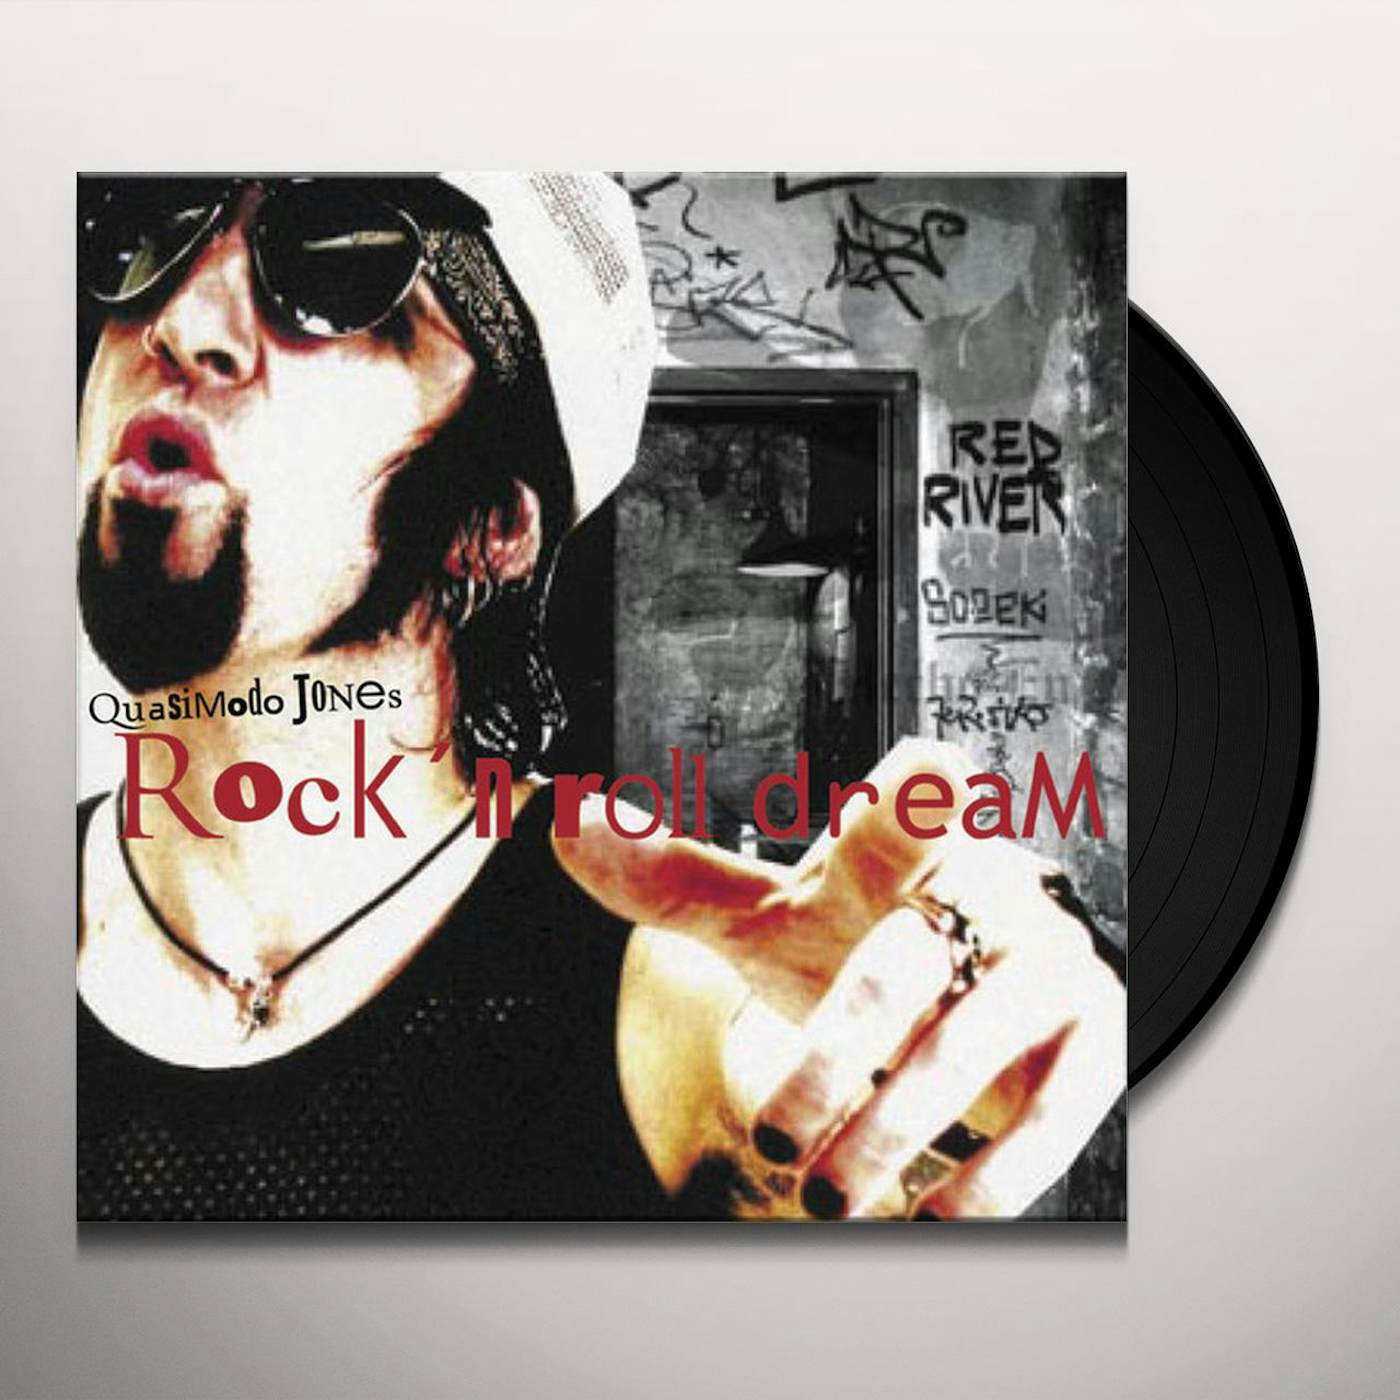 Quasimodo Jones ROCK'N ROLL DREAM Vinyl Record